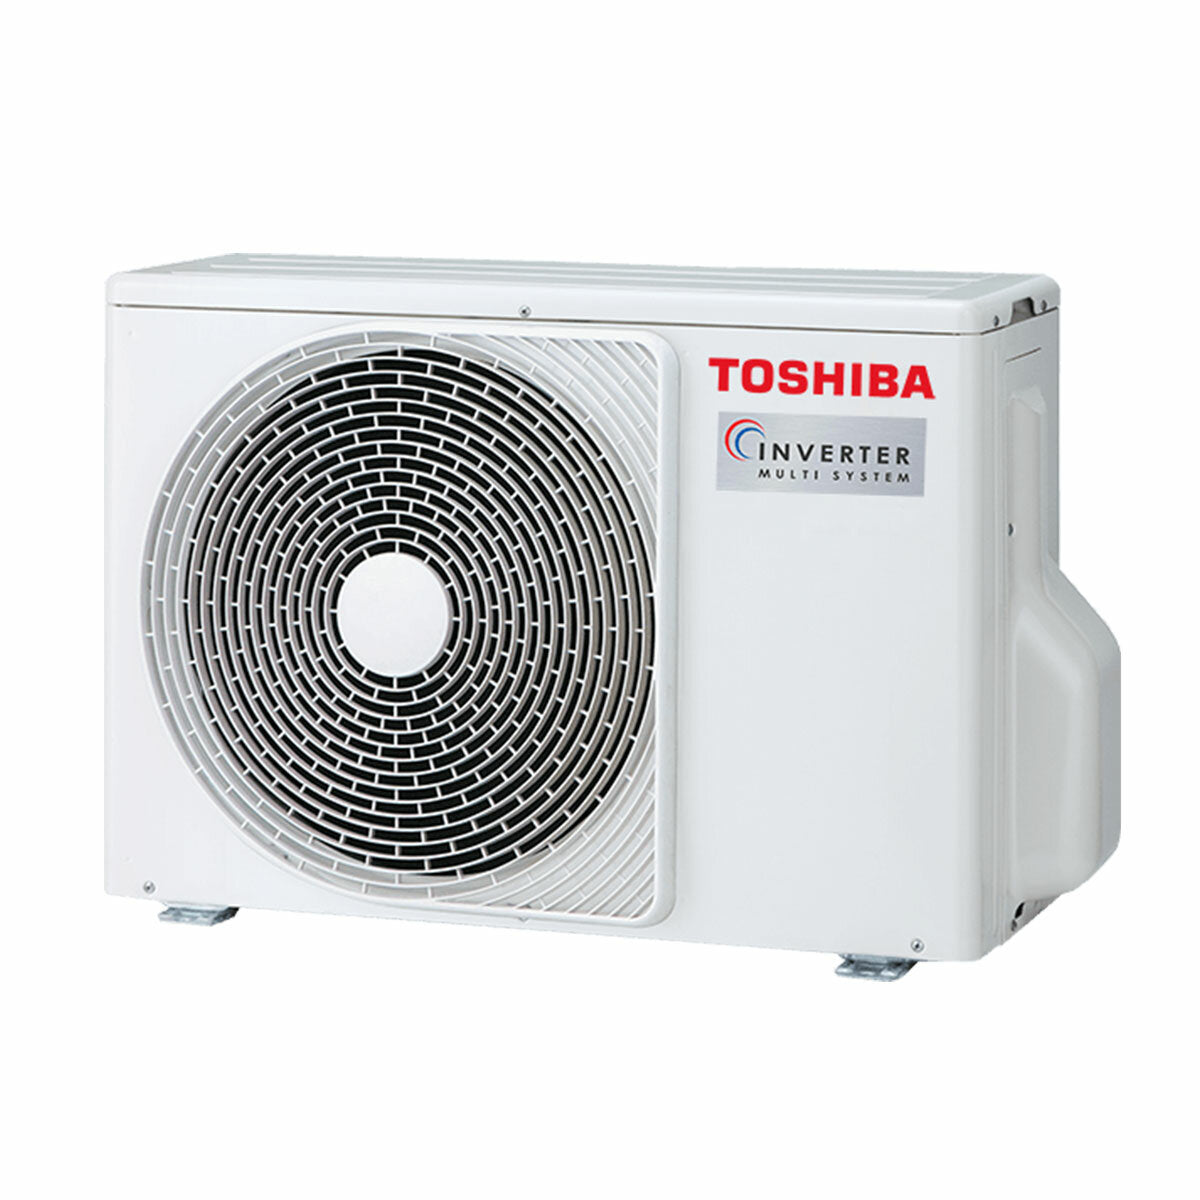 Toshiba ducted air conditioner U2 trial split 7000+7000+9000 BTU inverter A+++ external unit 5.2 kW